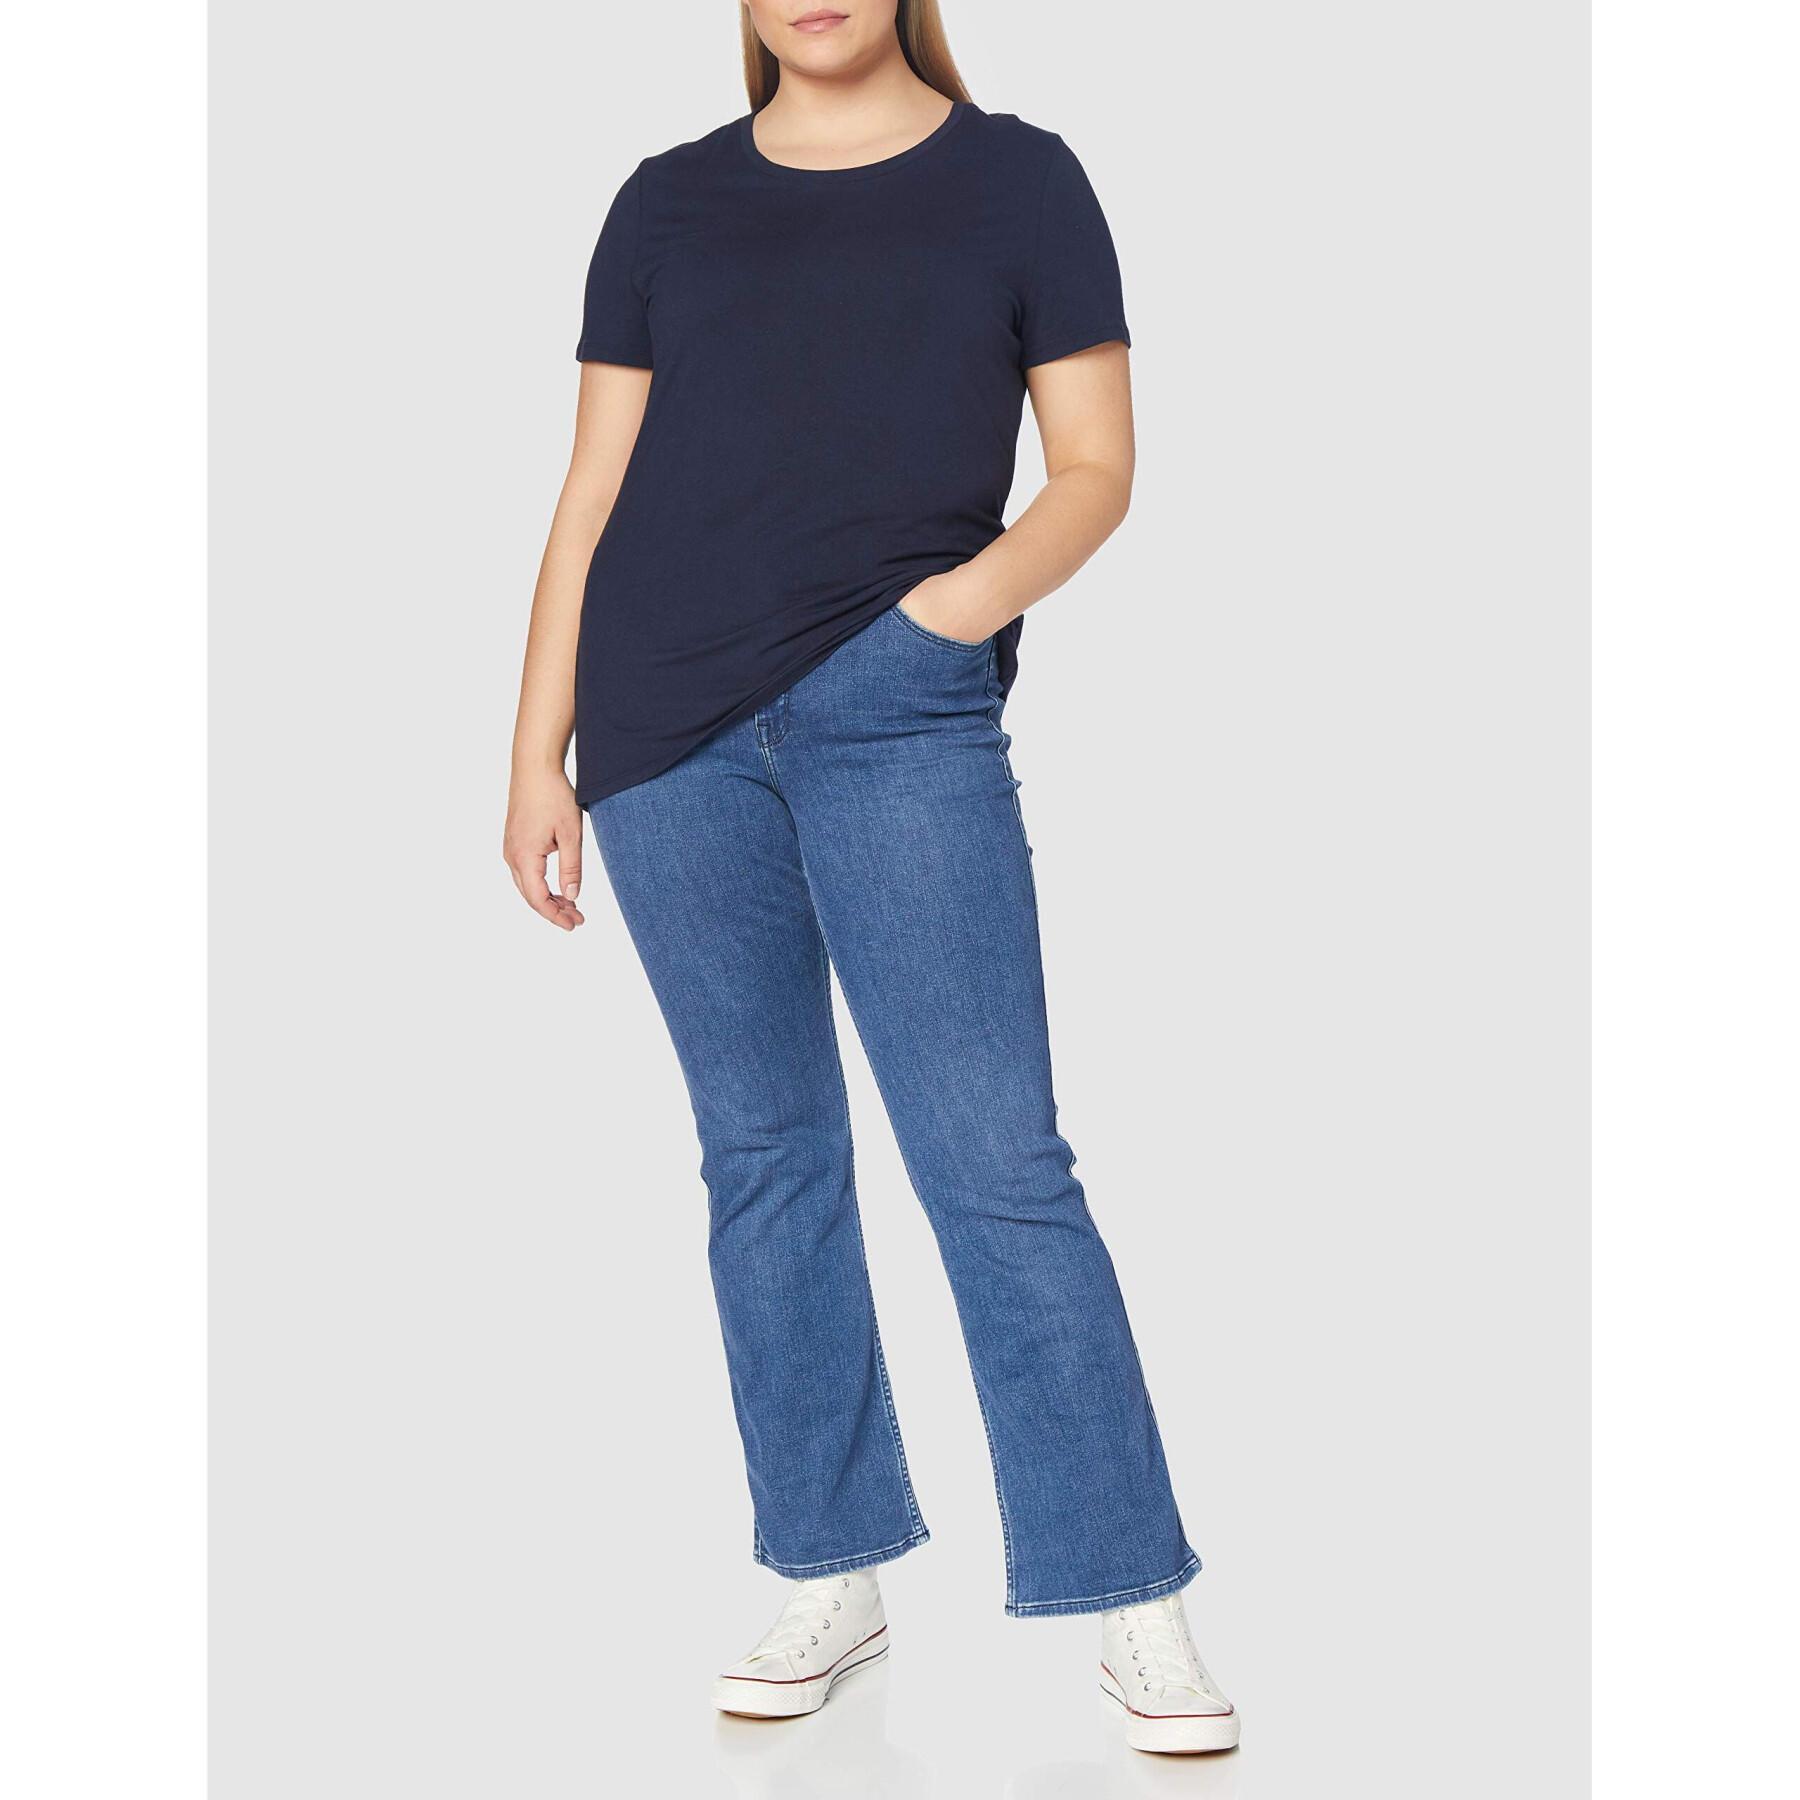 Women's jeans Lee Bootcut Plus